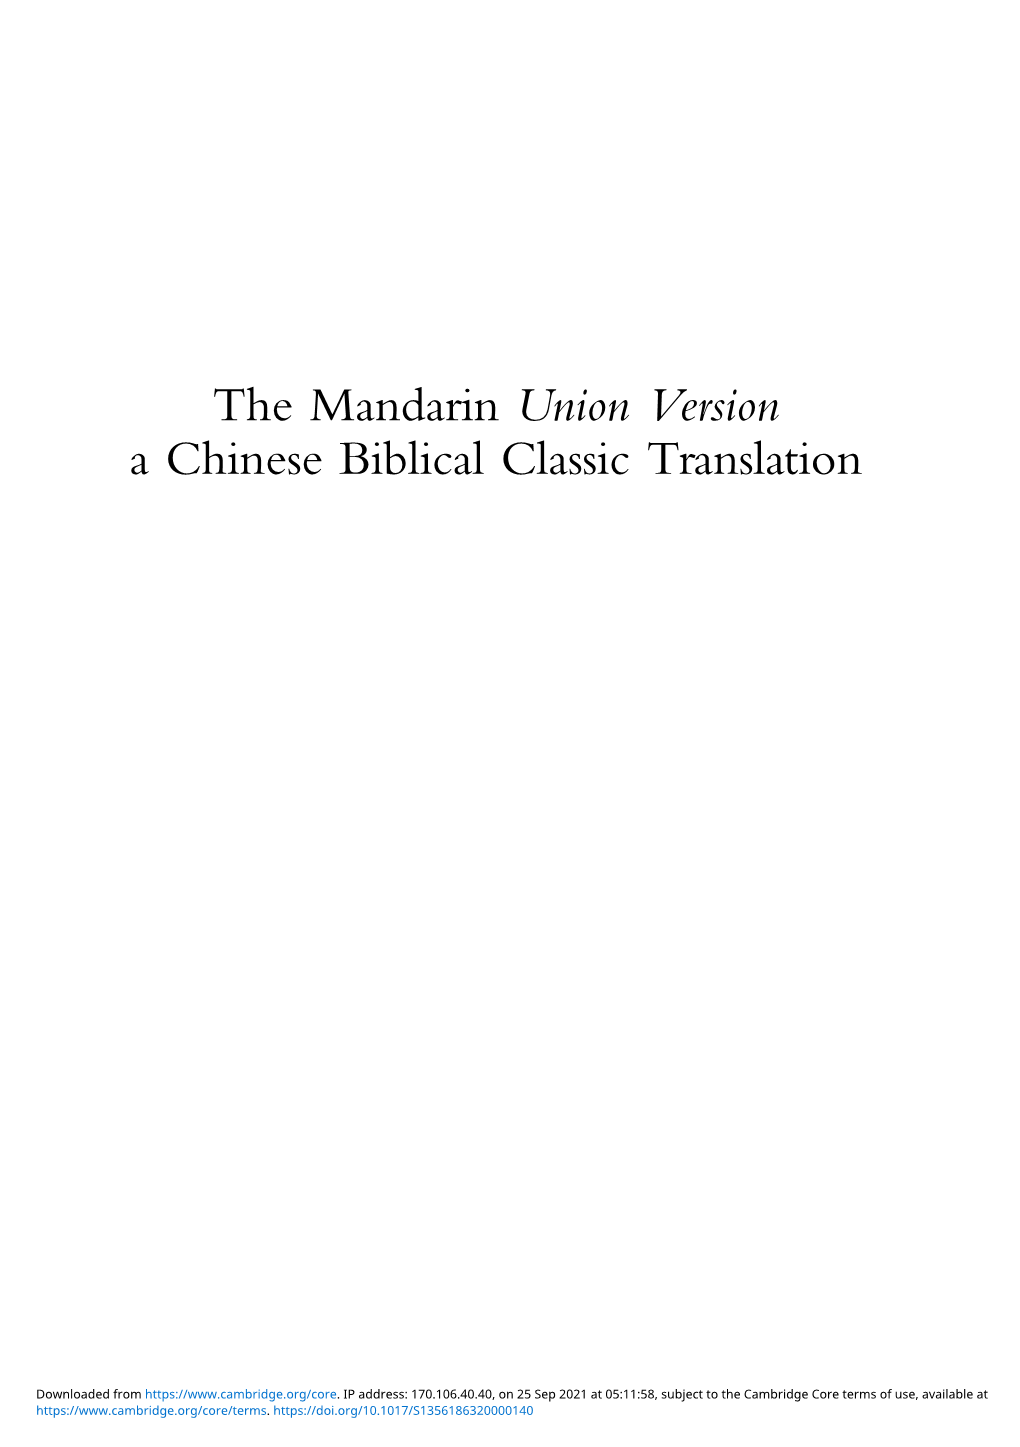 The Mandarin Union Version a Chinese Biblical Classic Translation